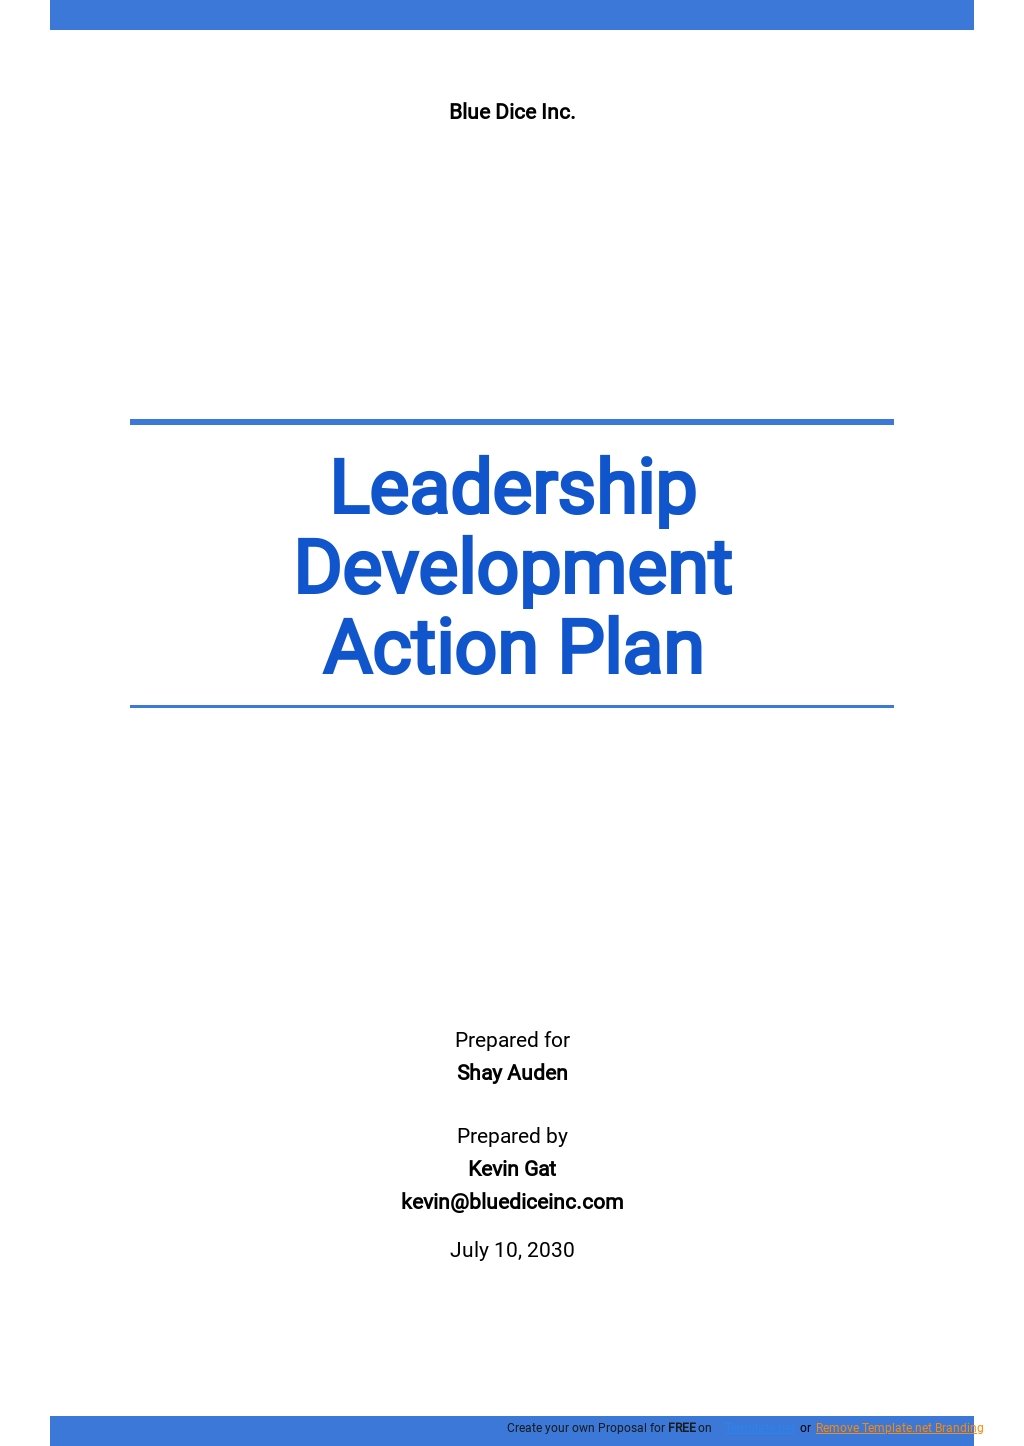 Leadership Development Action Plan Template.jpe